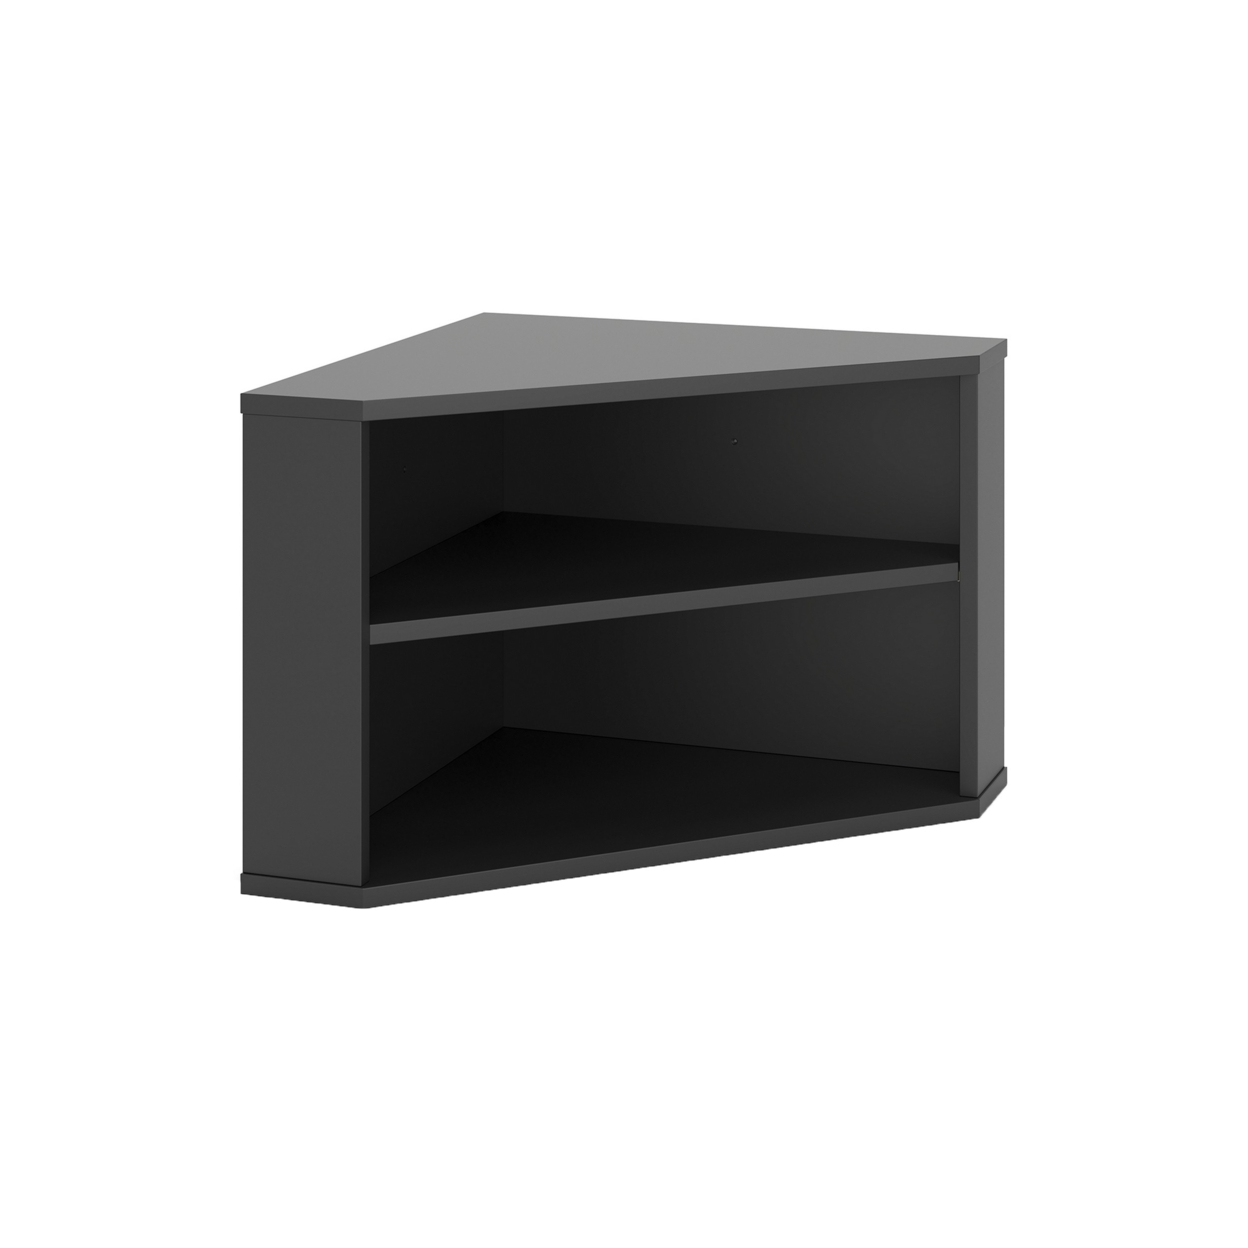 Tio 29 Inch Corner Bookcase Console With 2 Shelves, Triangle Shaped, Black- Saltoro Sherpi